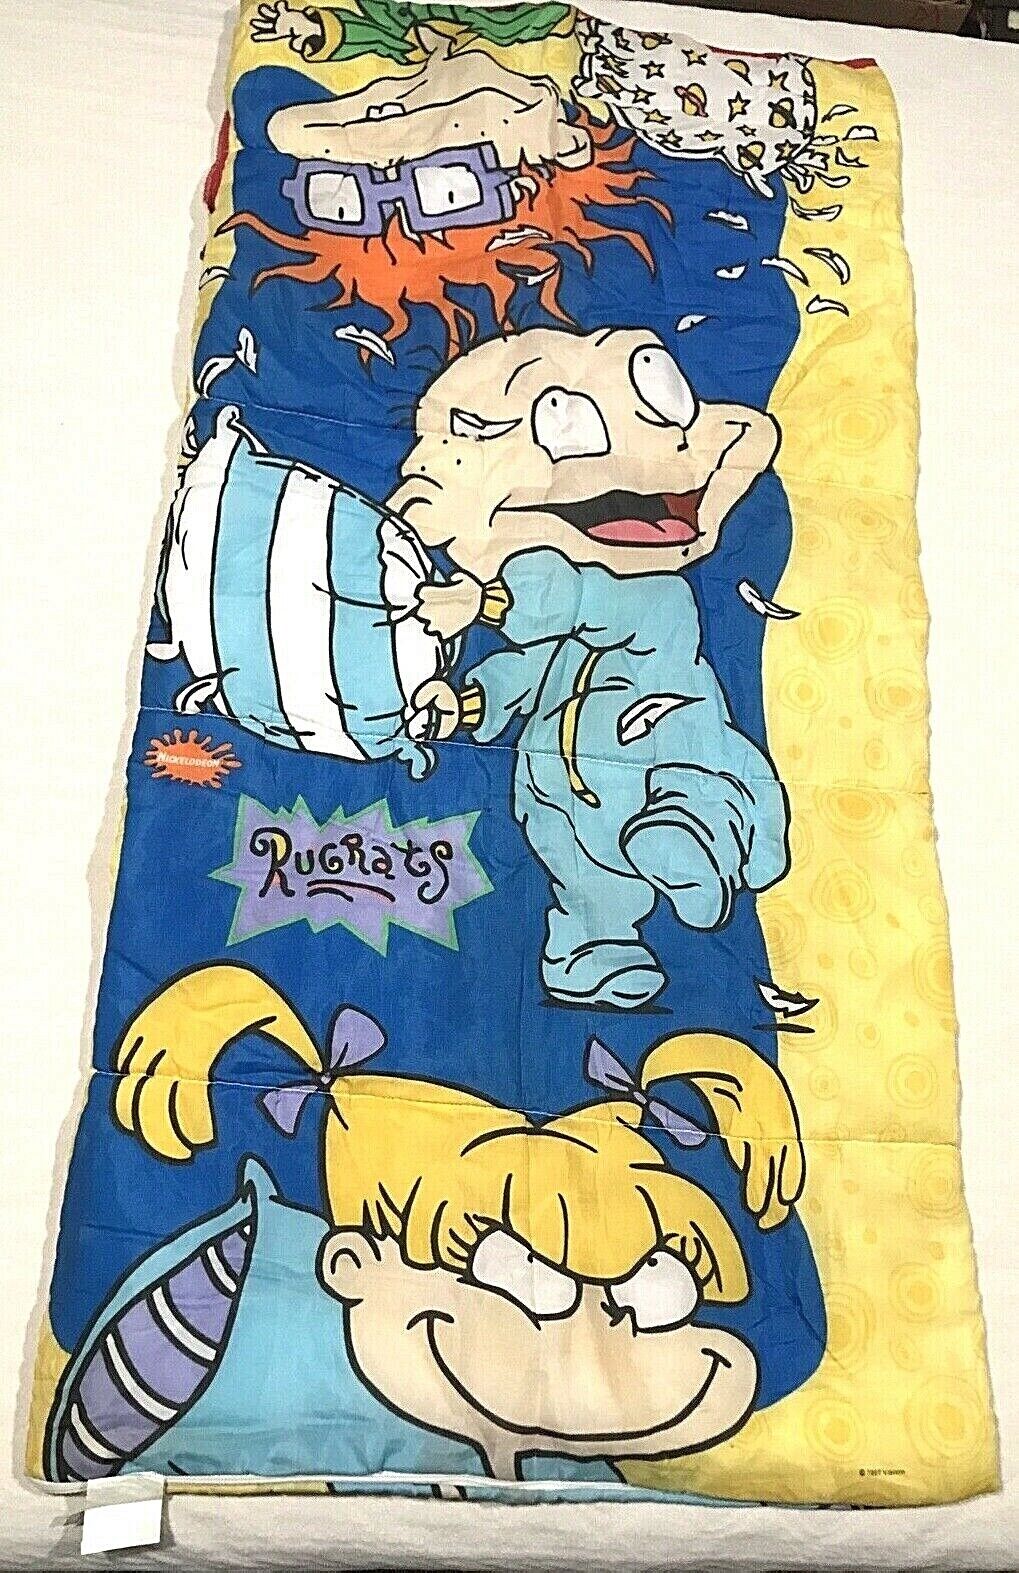 Vintage 1997 Nickelodeon Rugrats Kids Fleece Max Max 43% OFF 79% OFF Sleeping Bag Lined